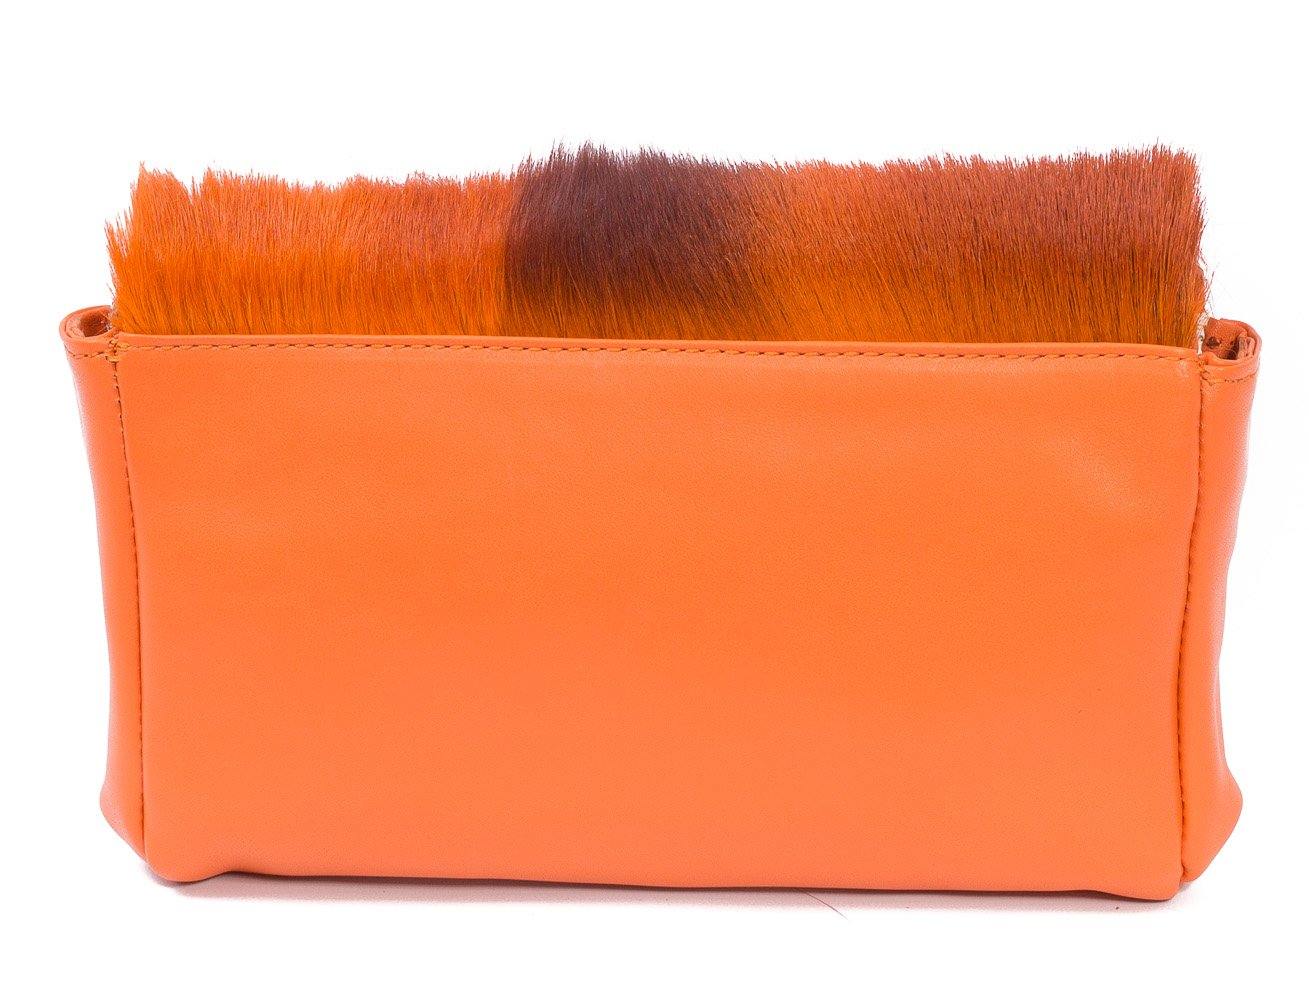 sherene melinda springbok hair-on-hide orange leather Sophy SS18 Clutch Bag Stripe back